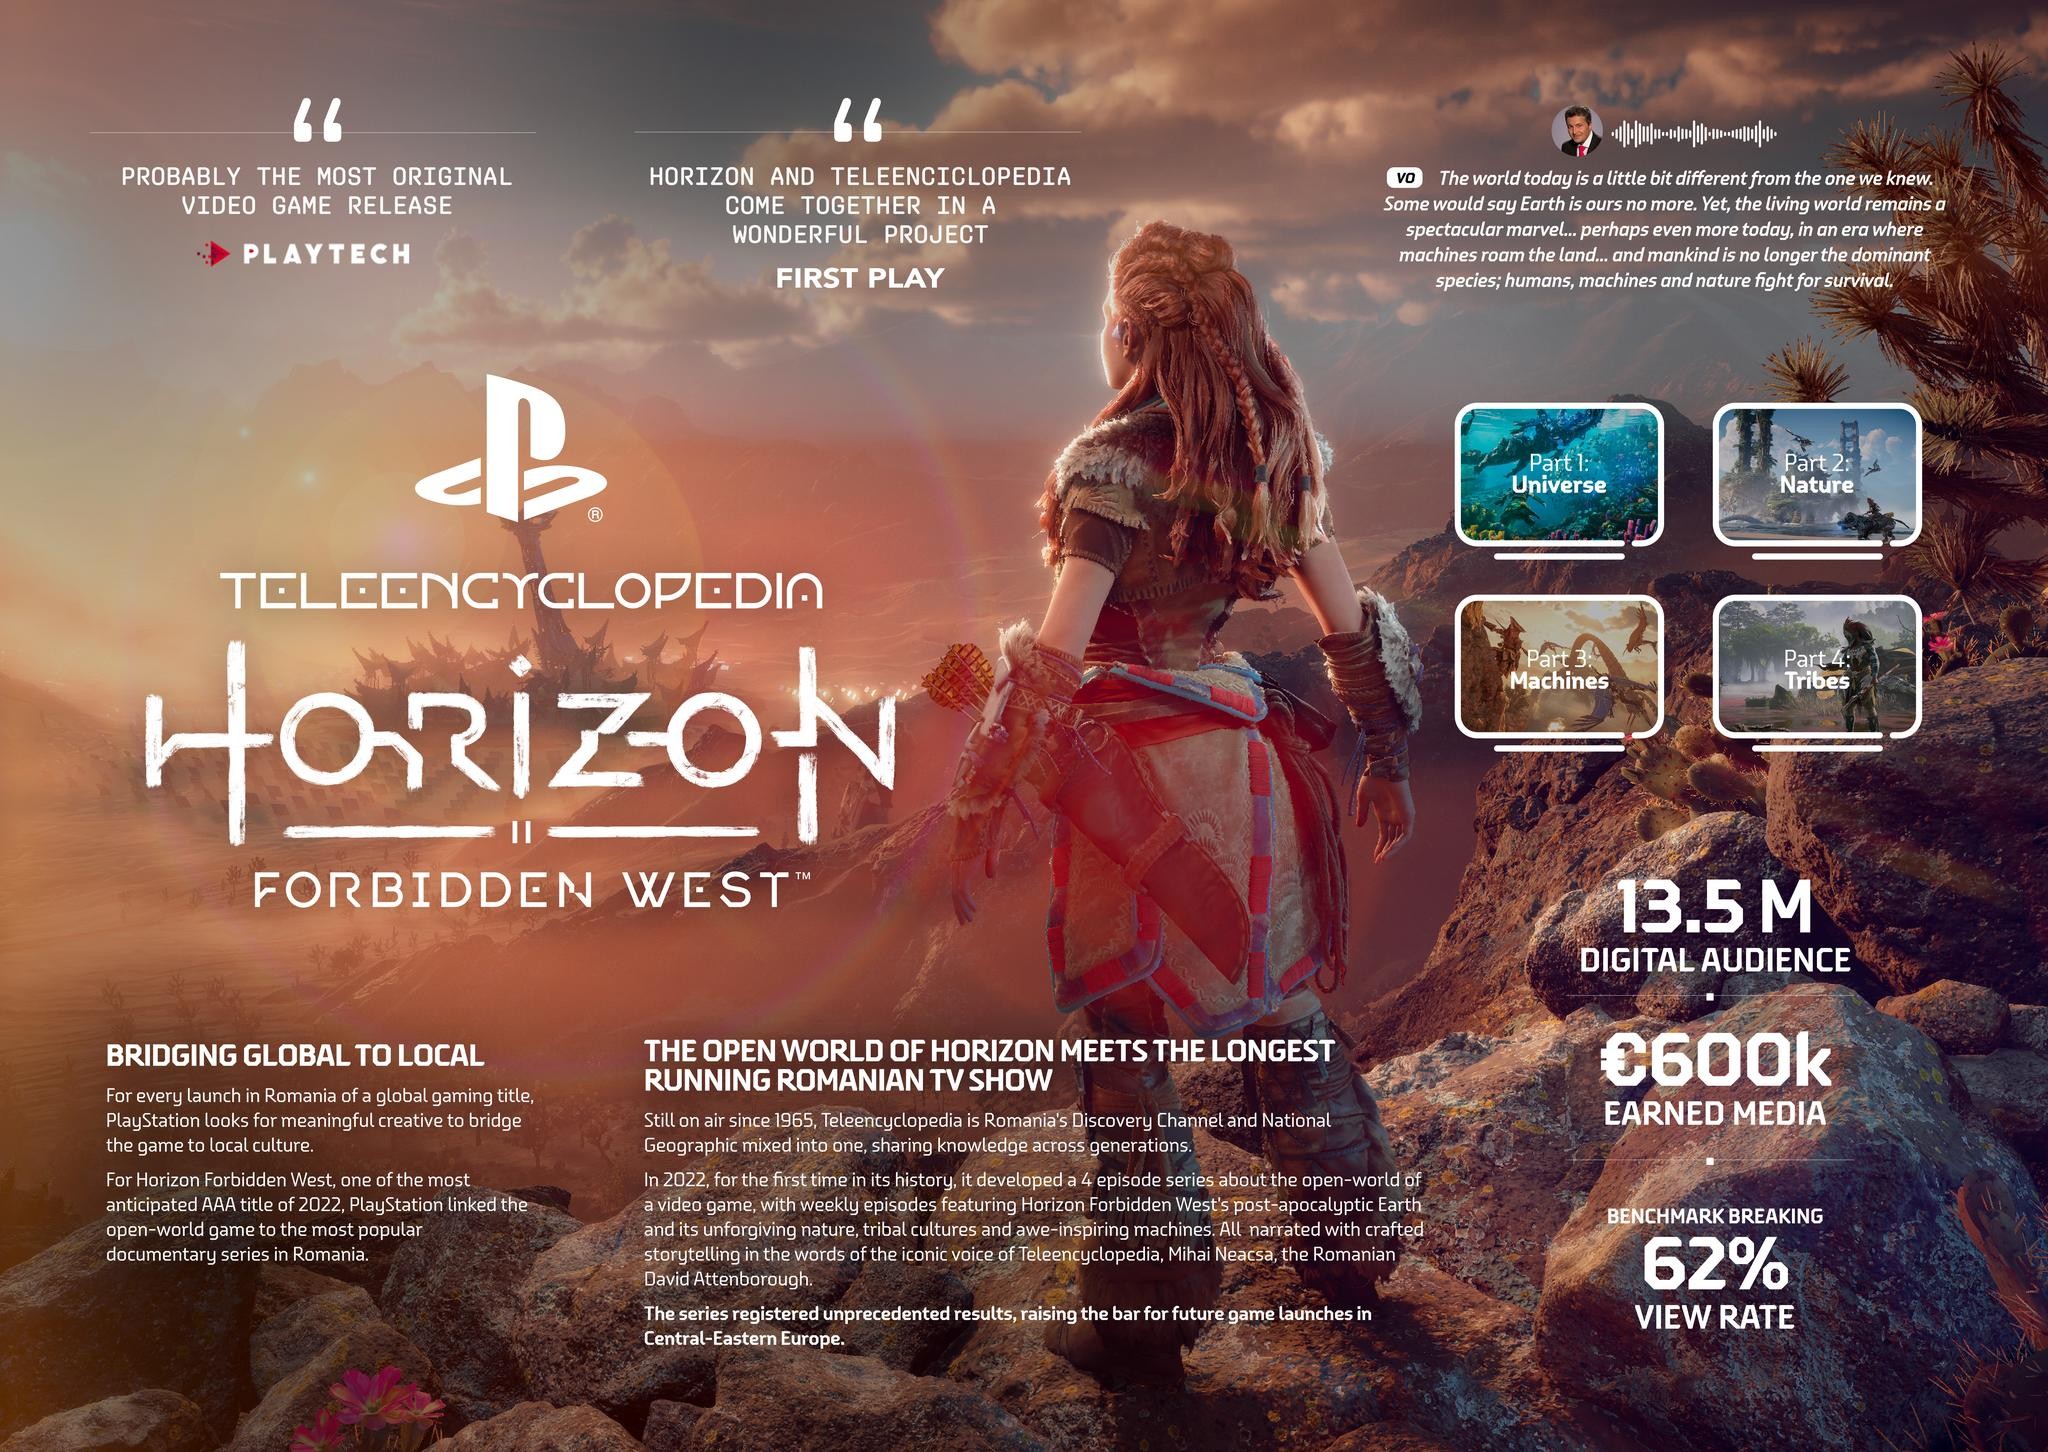 TeleEncyclopedia Horizon Forbidden West